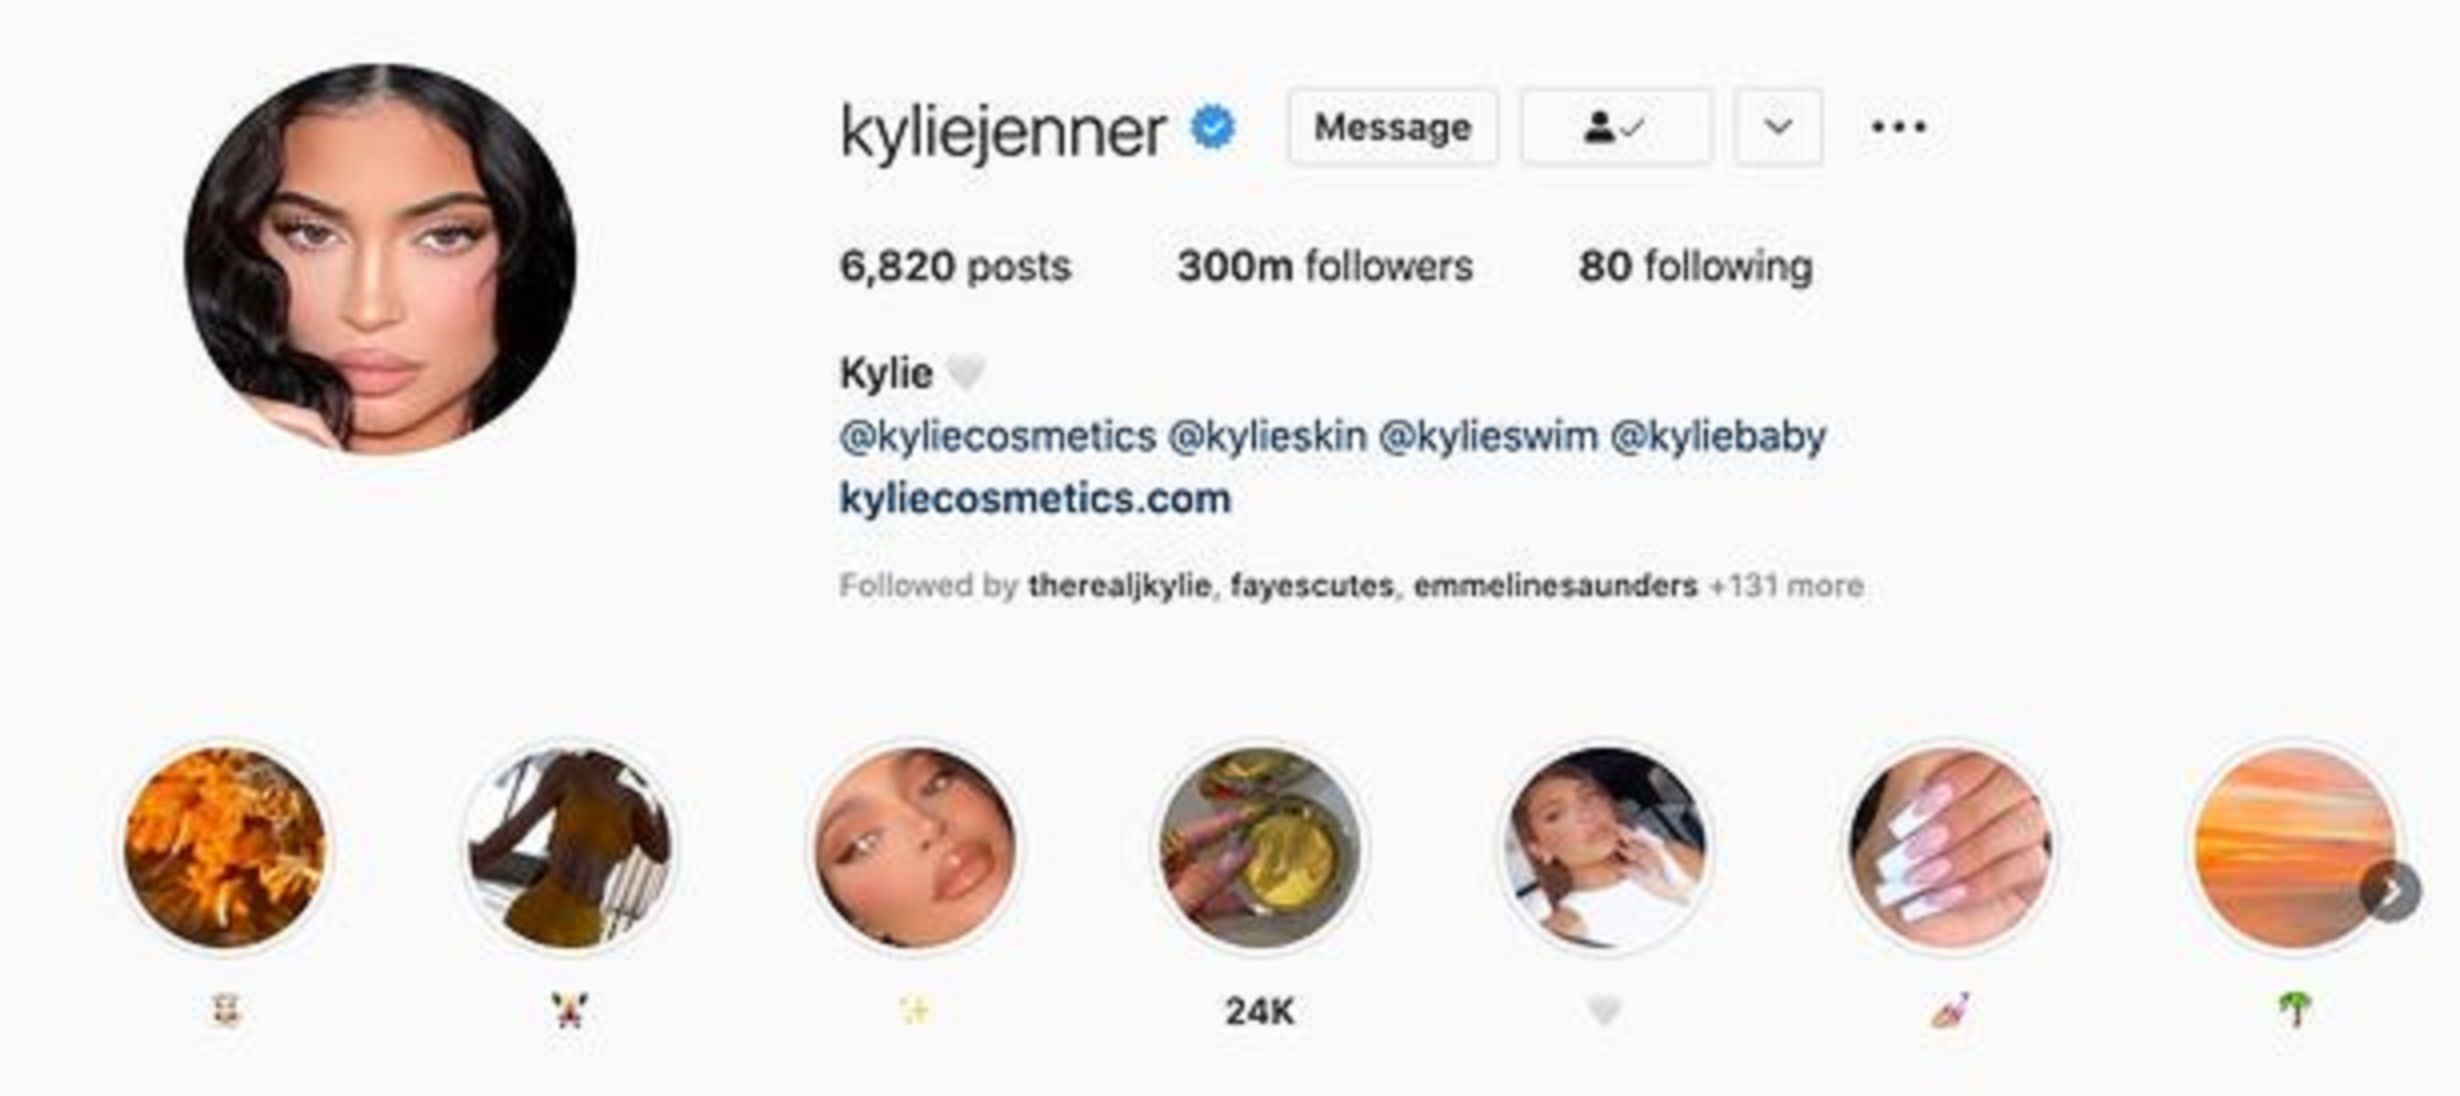 Kylie sekarang memiliki 300 juta pengikut.  